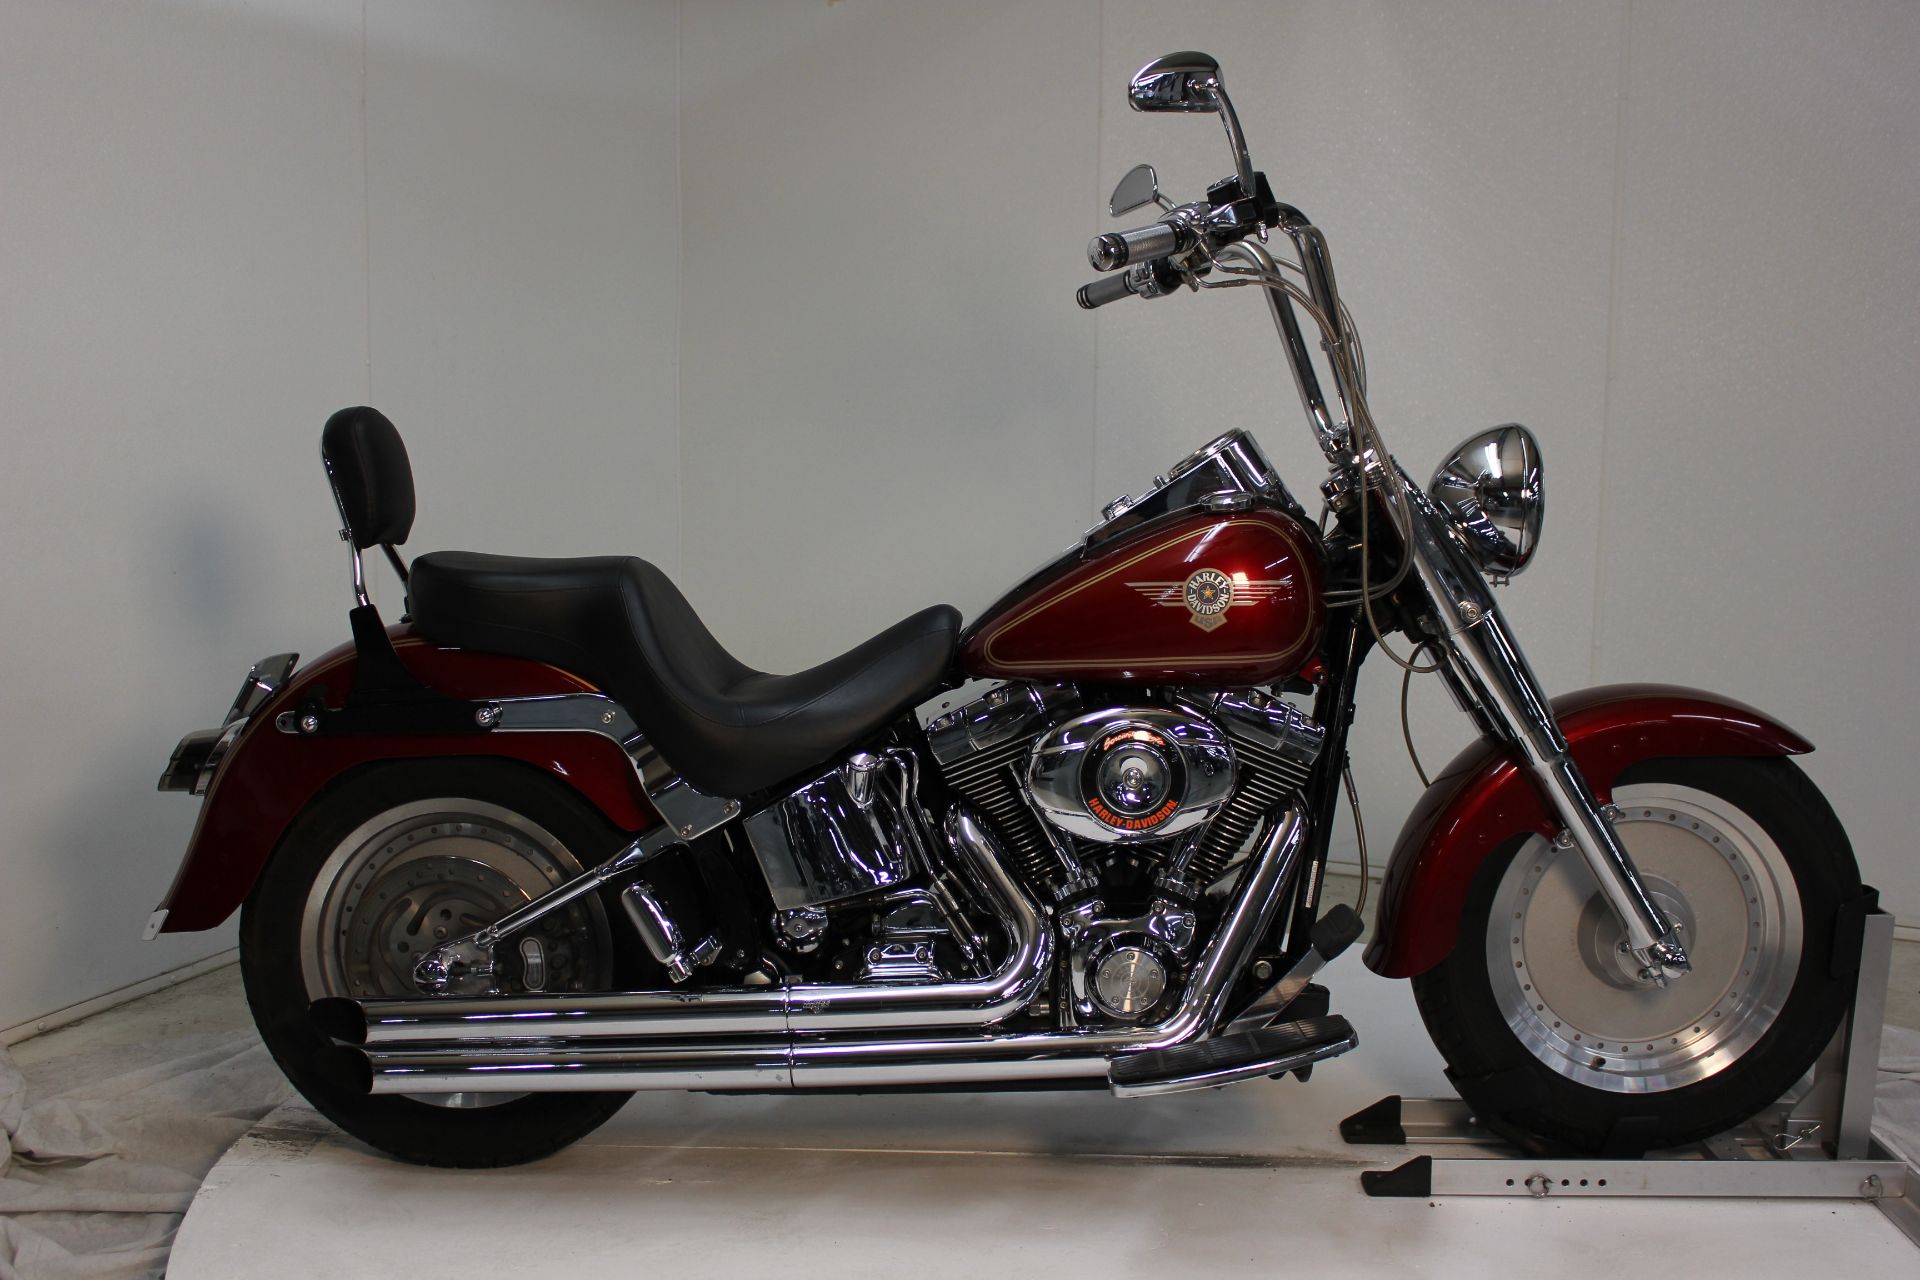 2005 Harley-Davidson FLSTFIAE Fat Boy® in Pittsfield, Massachusetts - Photo 5